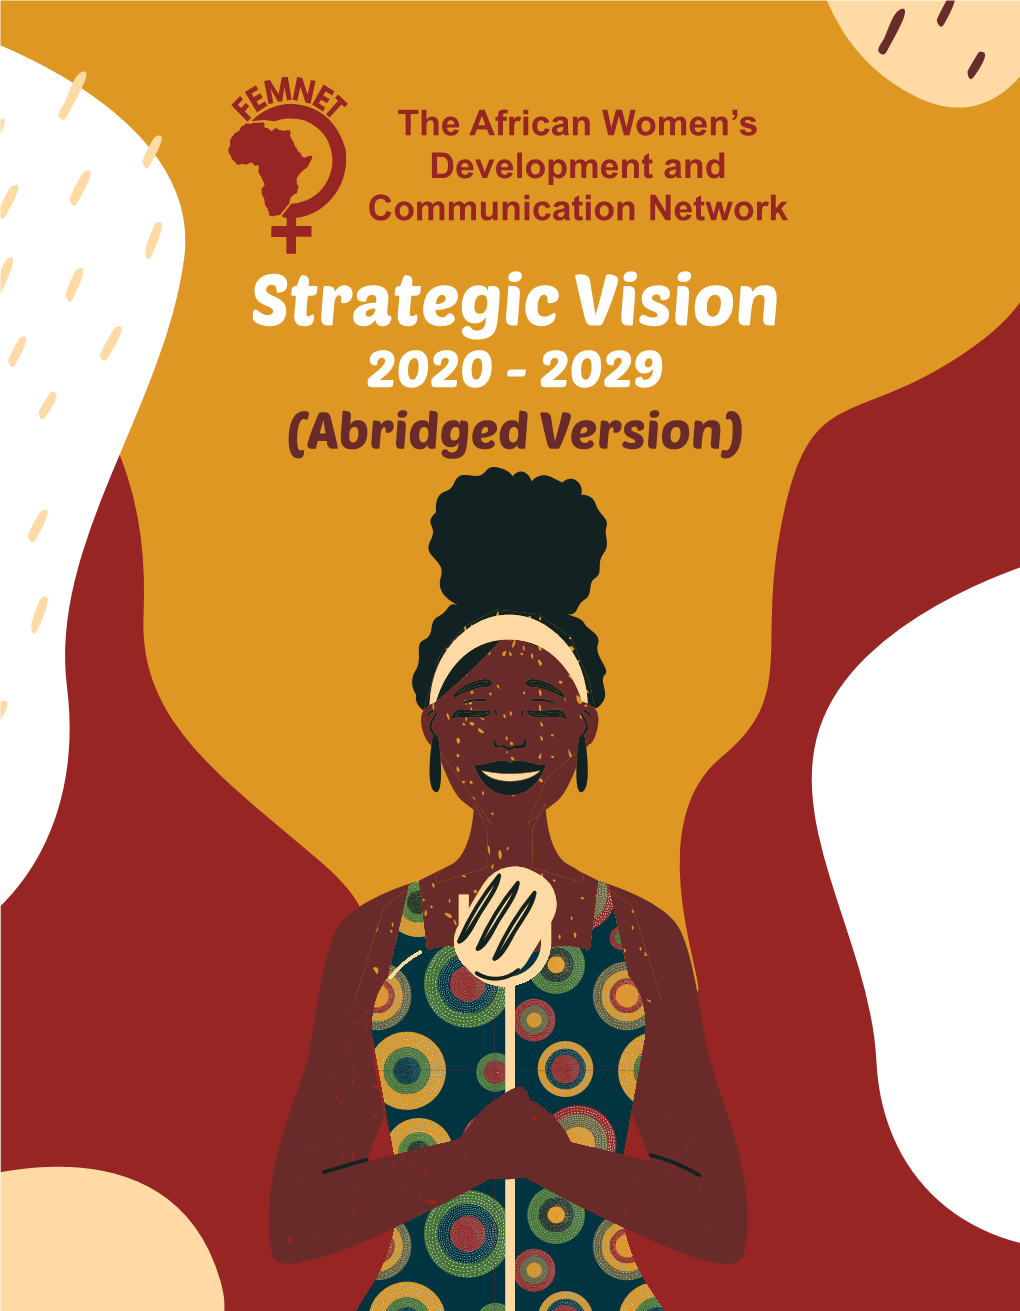 Strategic Vision 2020 - 2029 (Abridged Version)